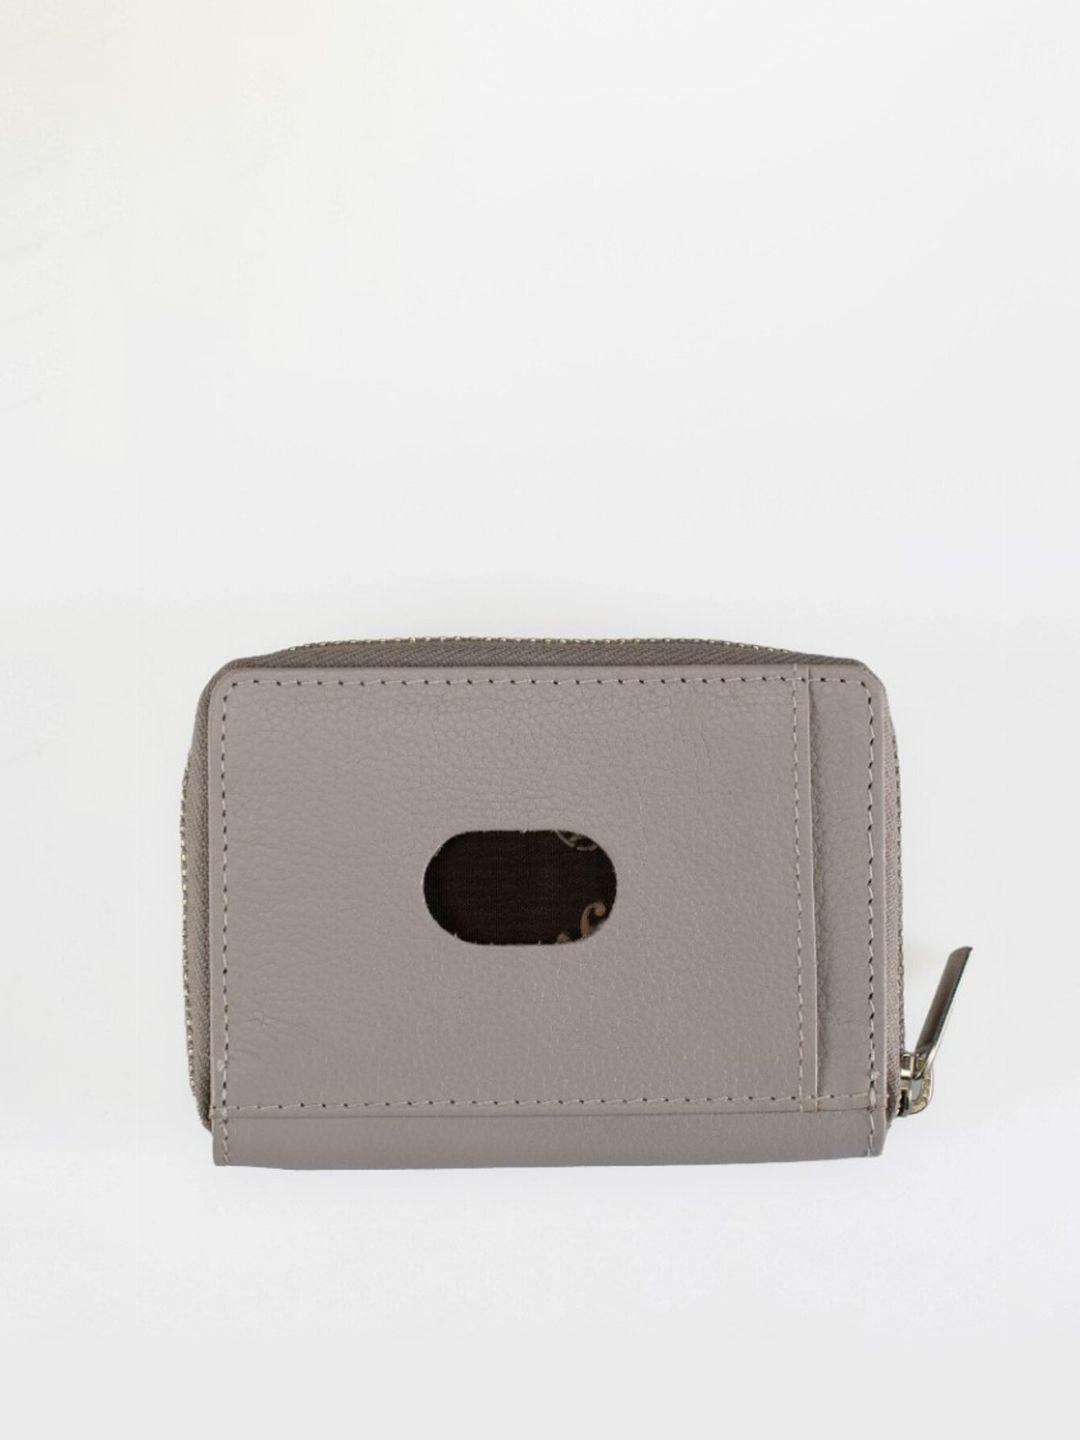 picco massimo leather zip around wallet